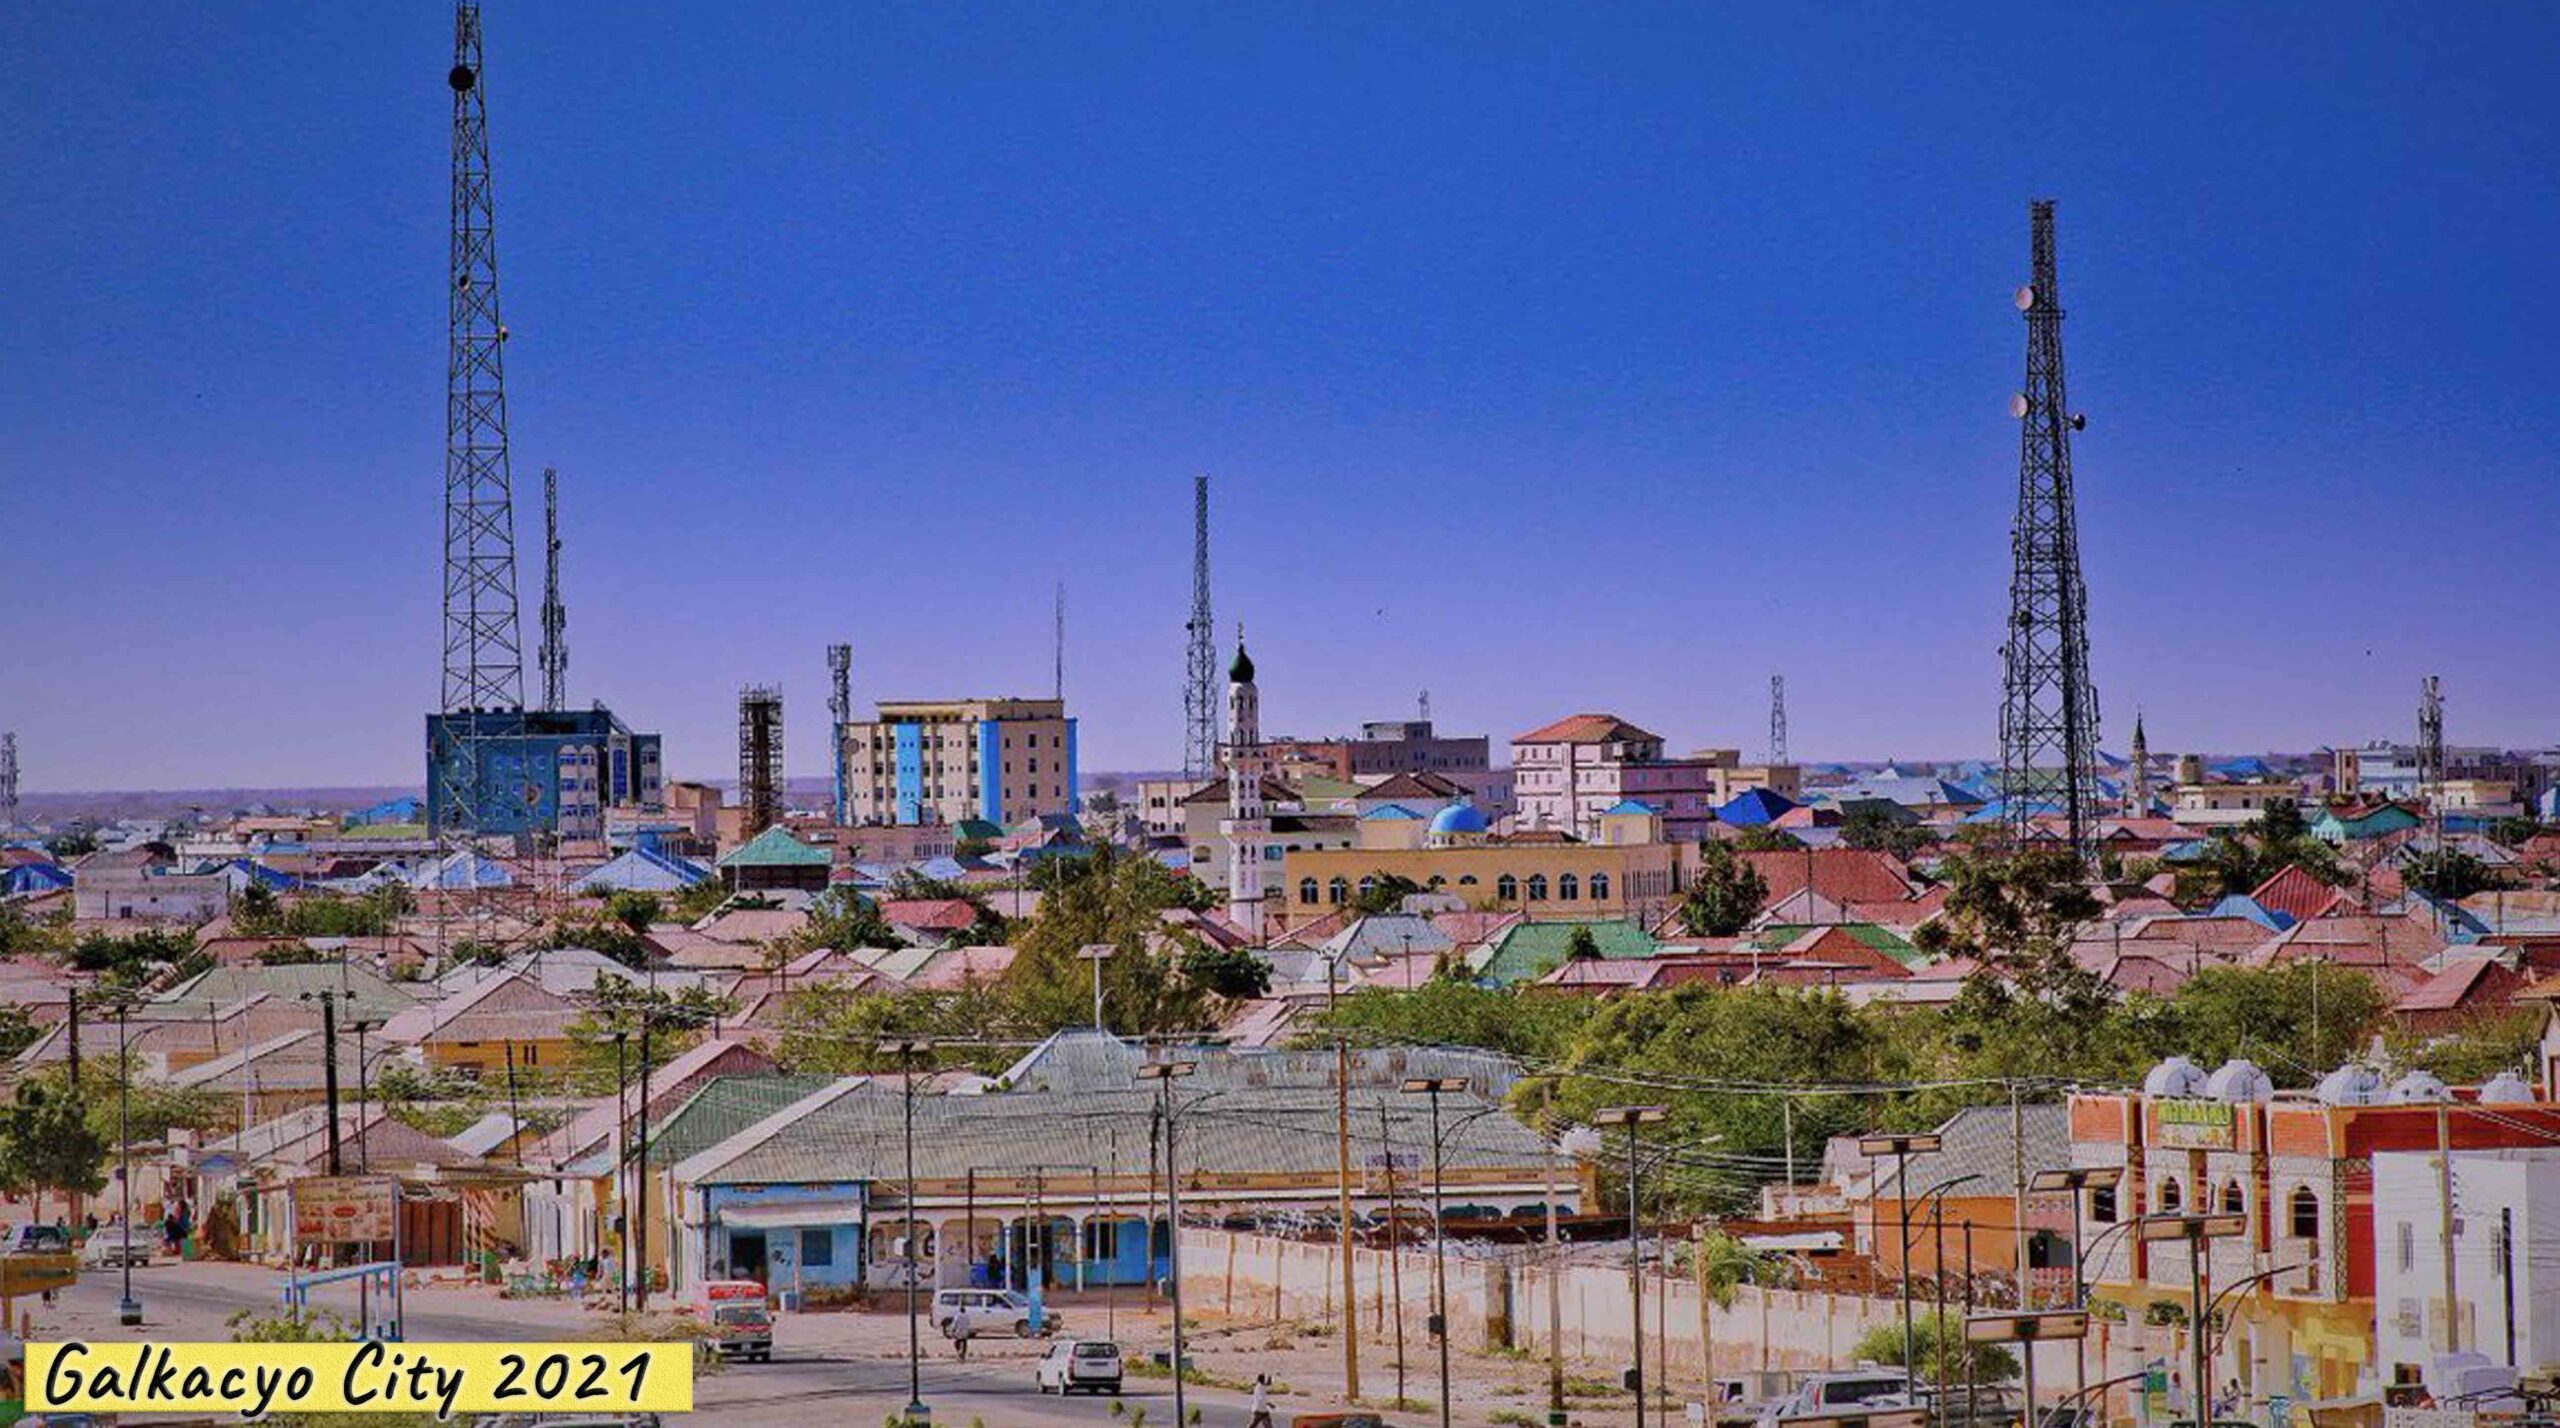 Galka’o City, “Central Region of Somalia”